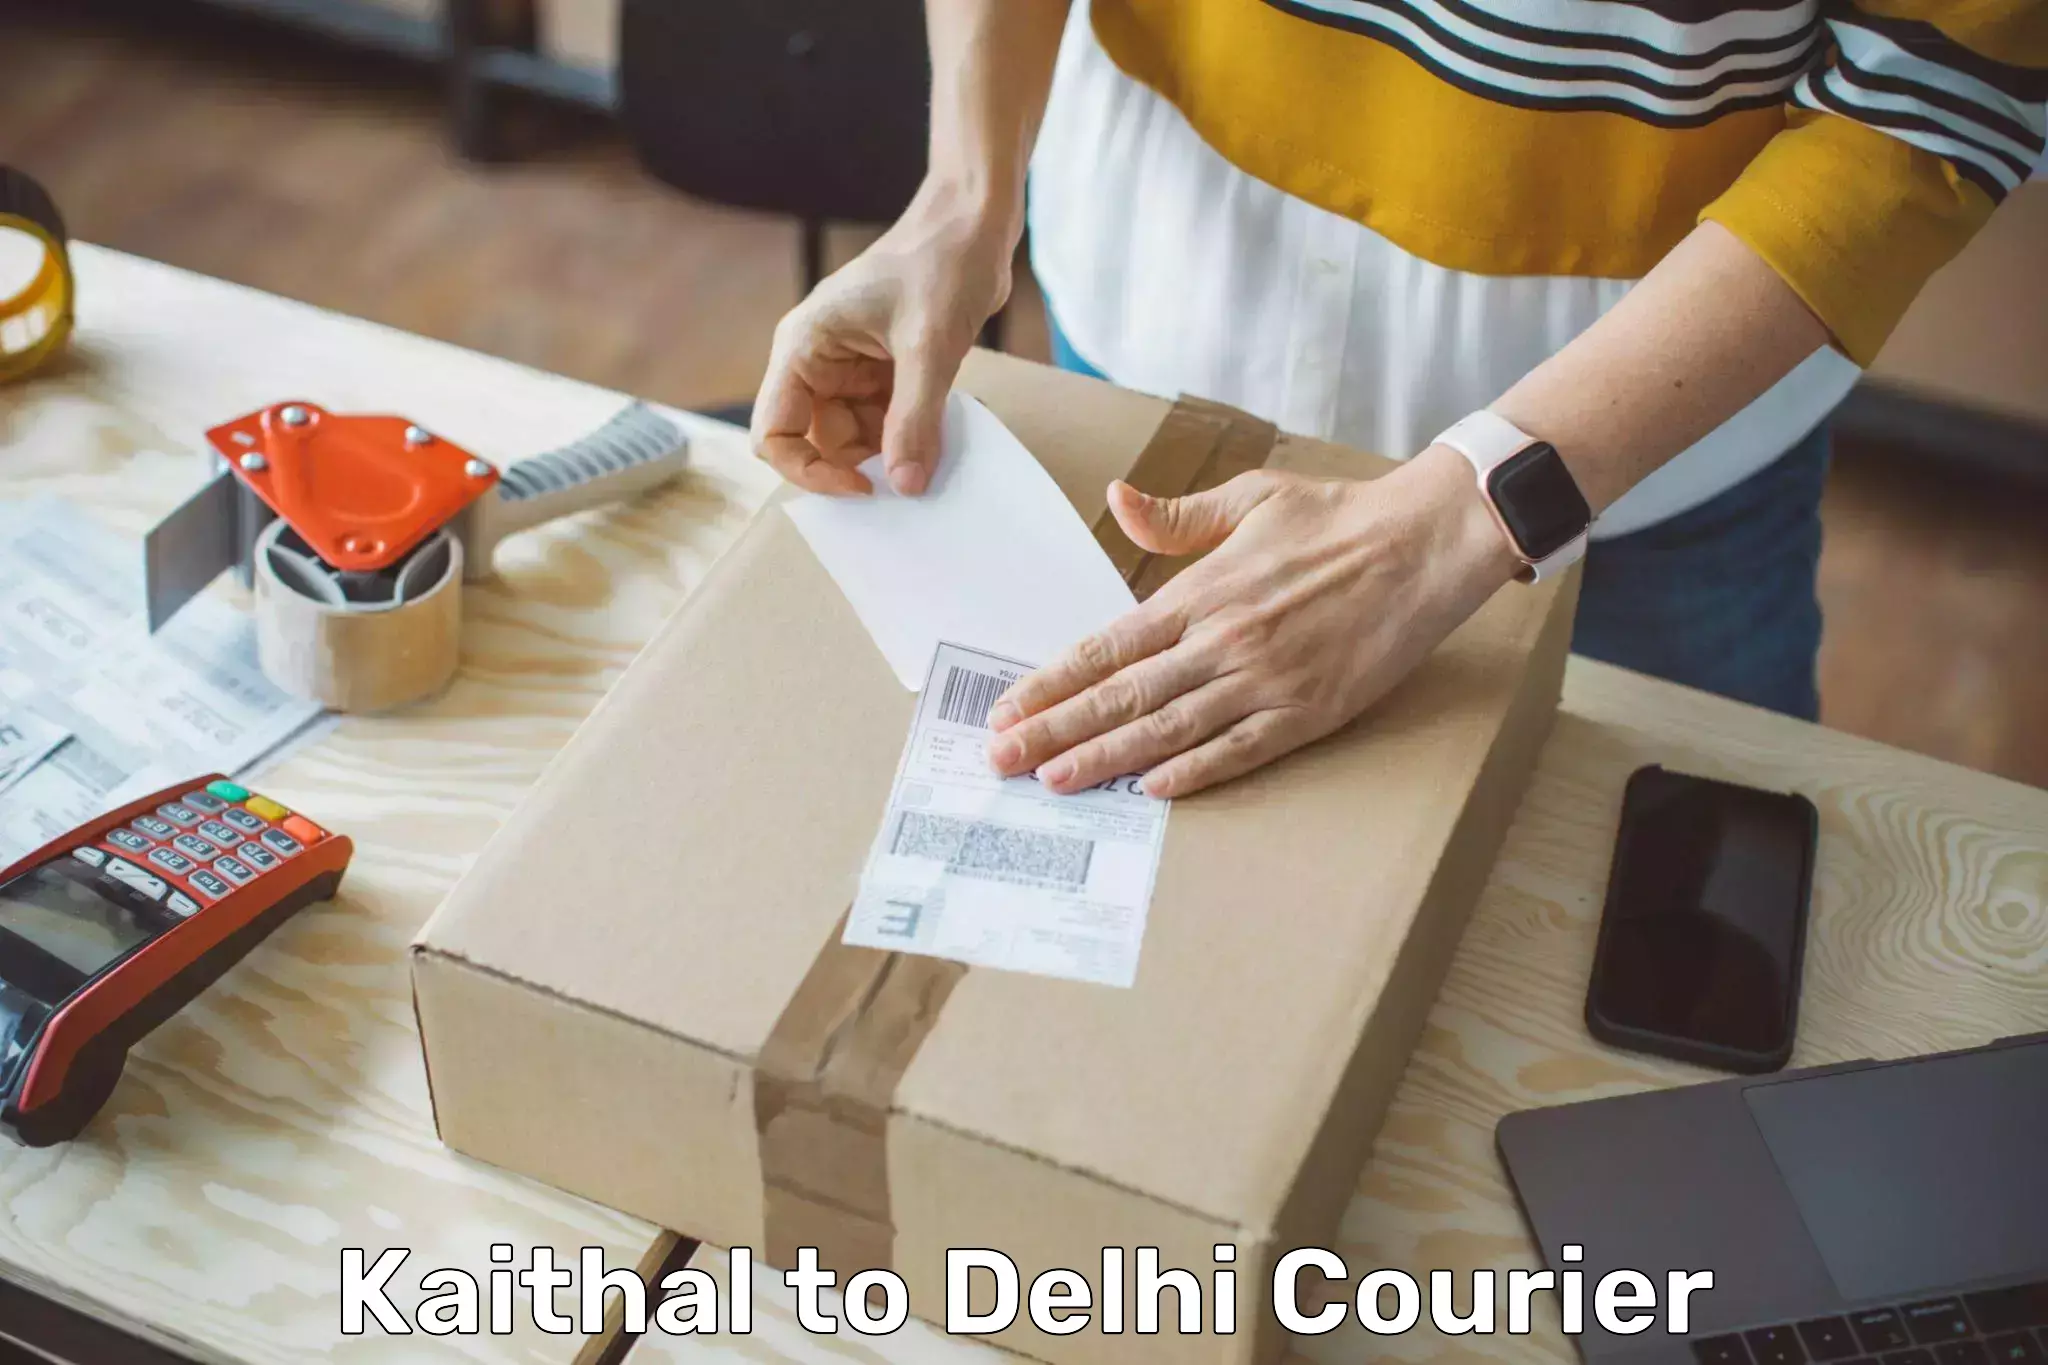 Global logistics network Kaithal to Delhi